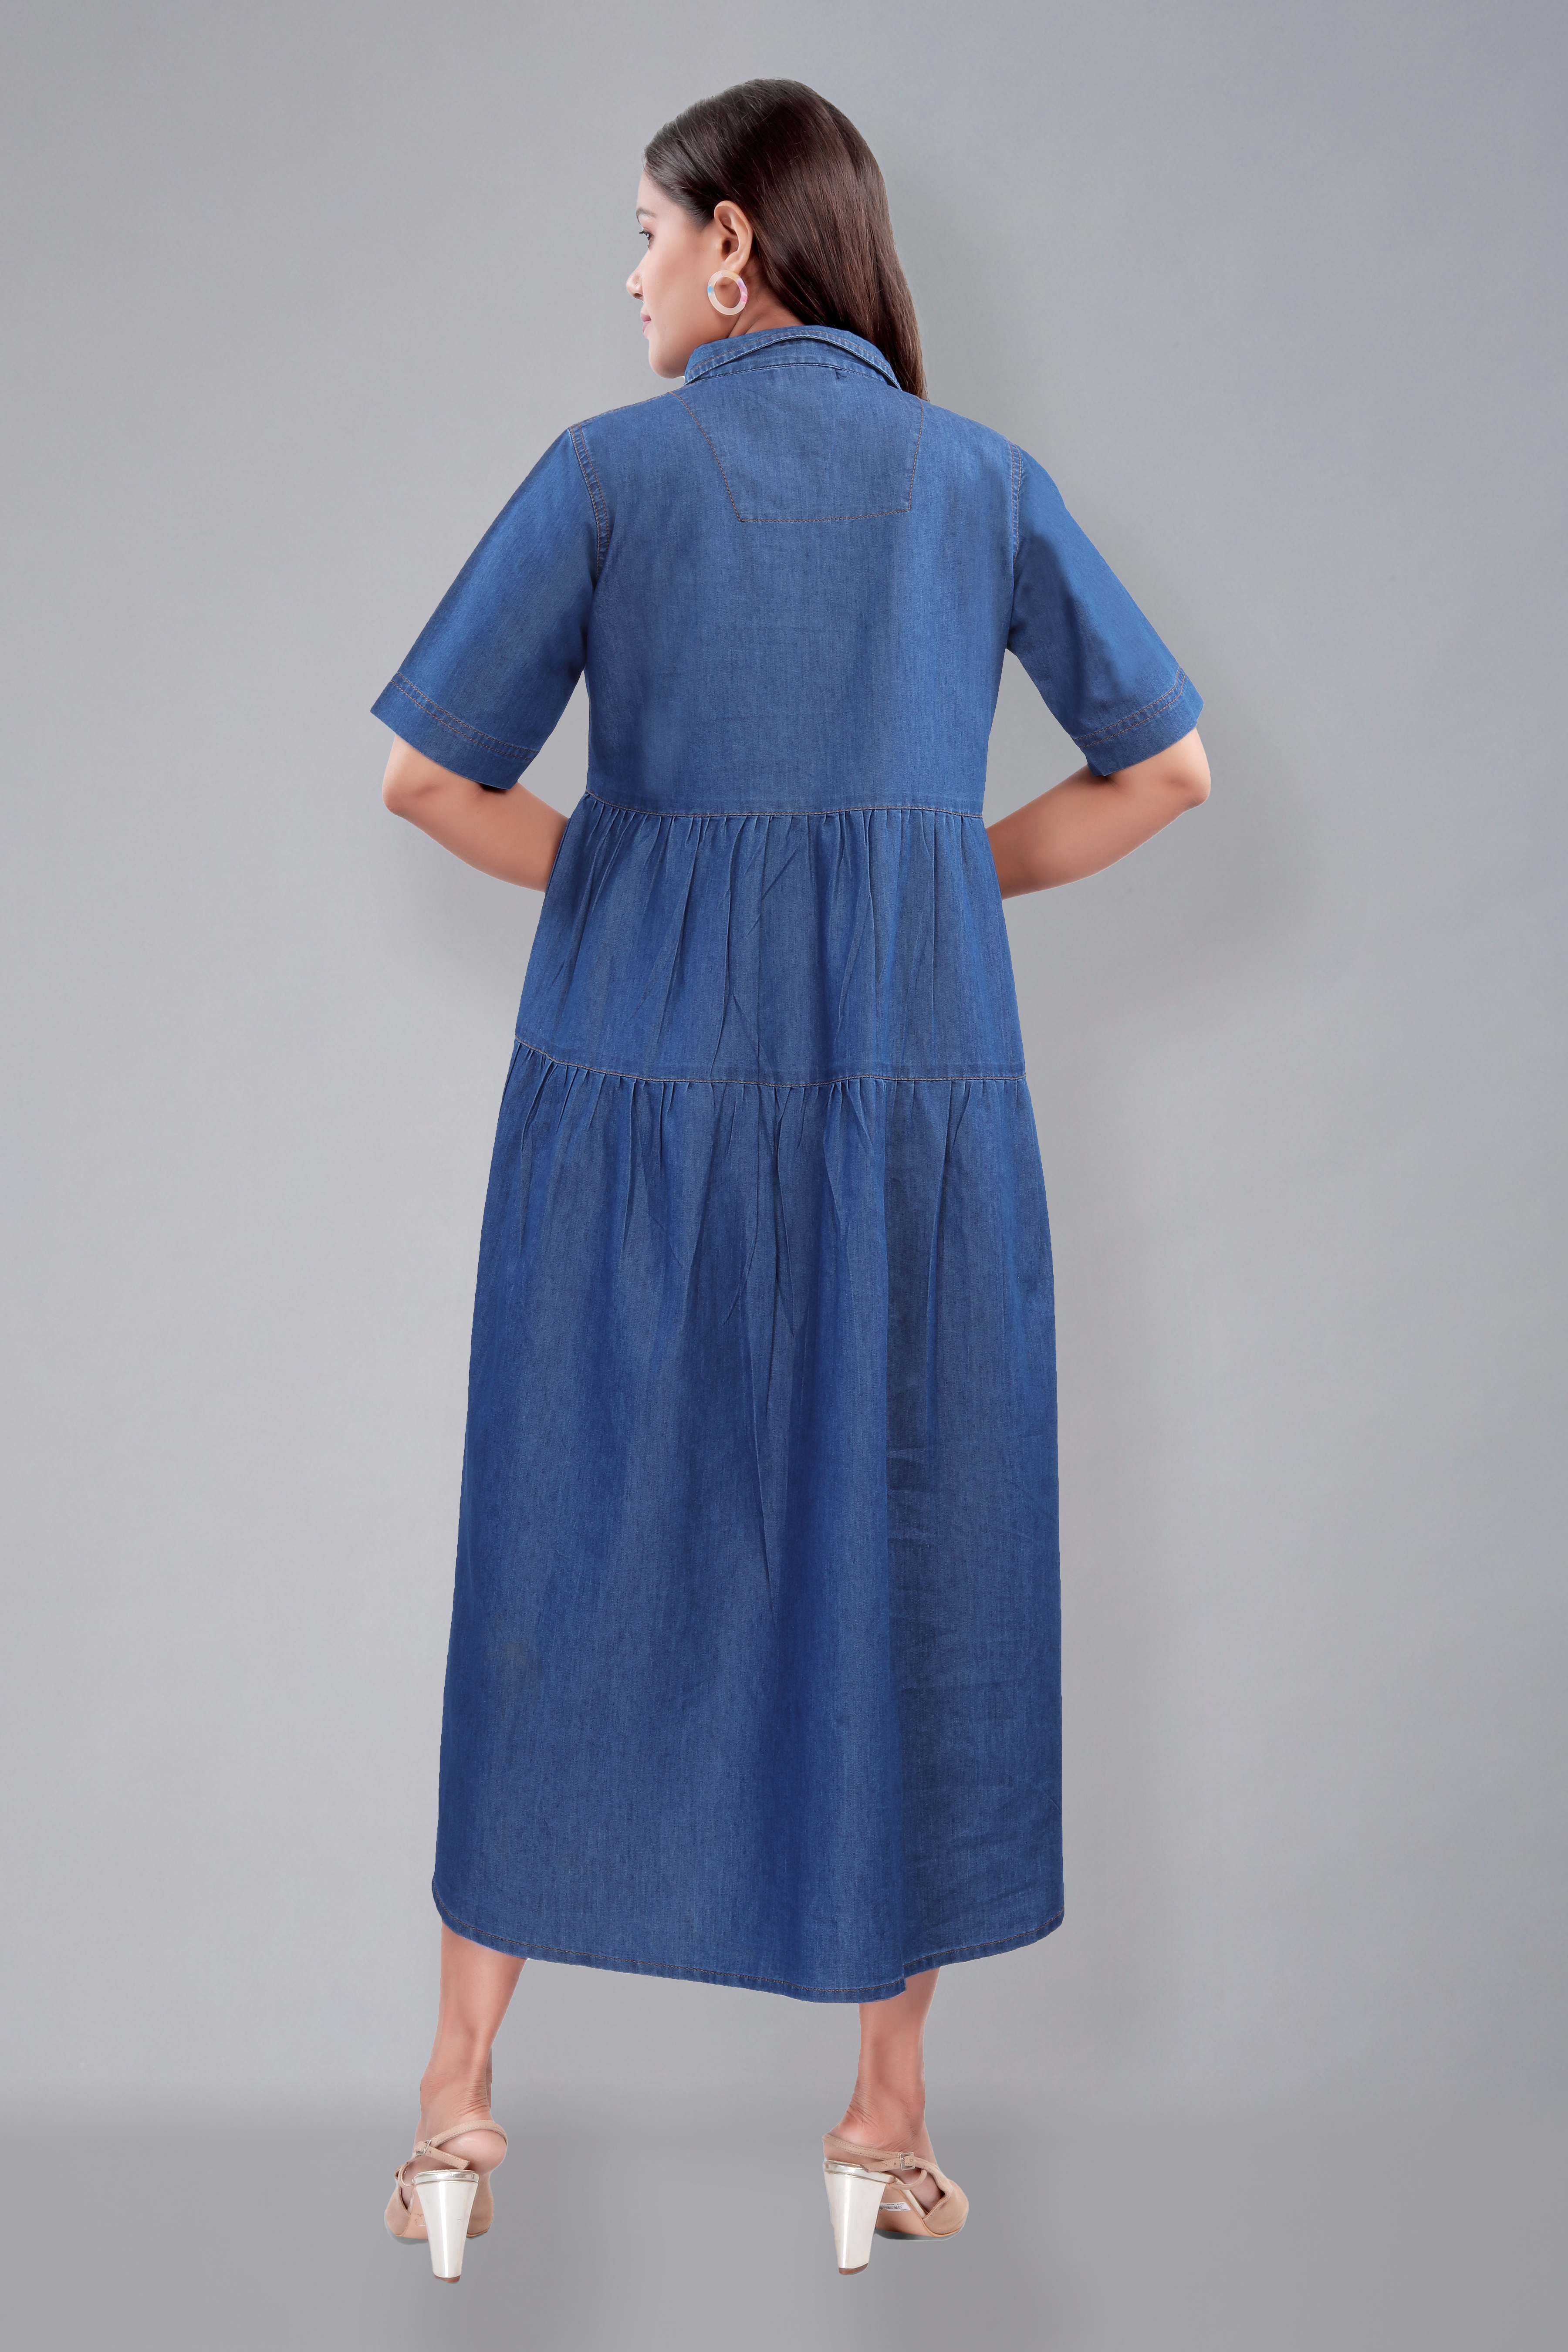 Denim Dress With pocket (D6037-D)